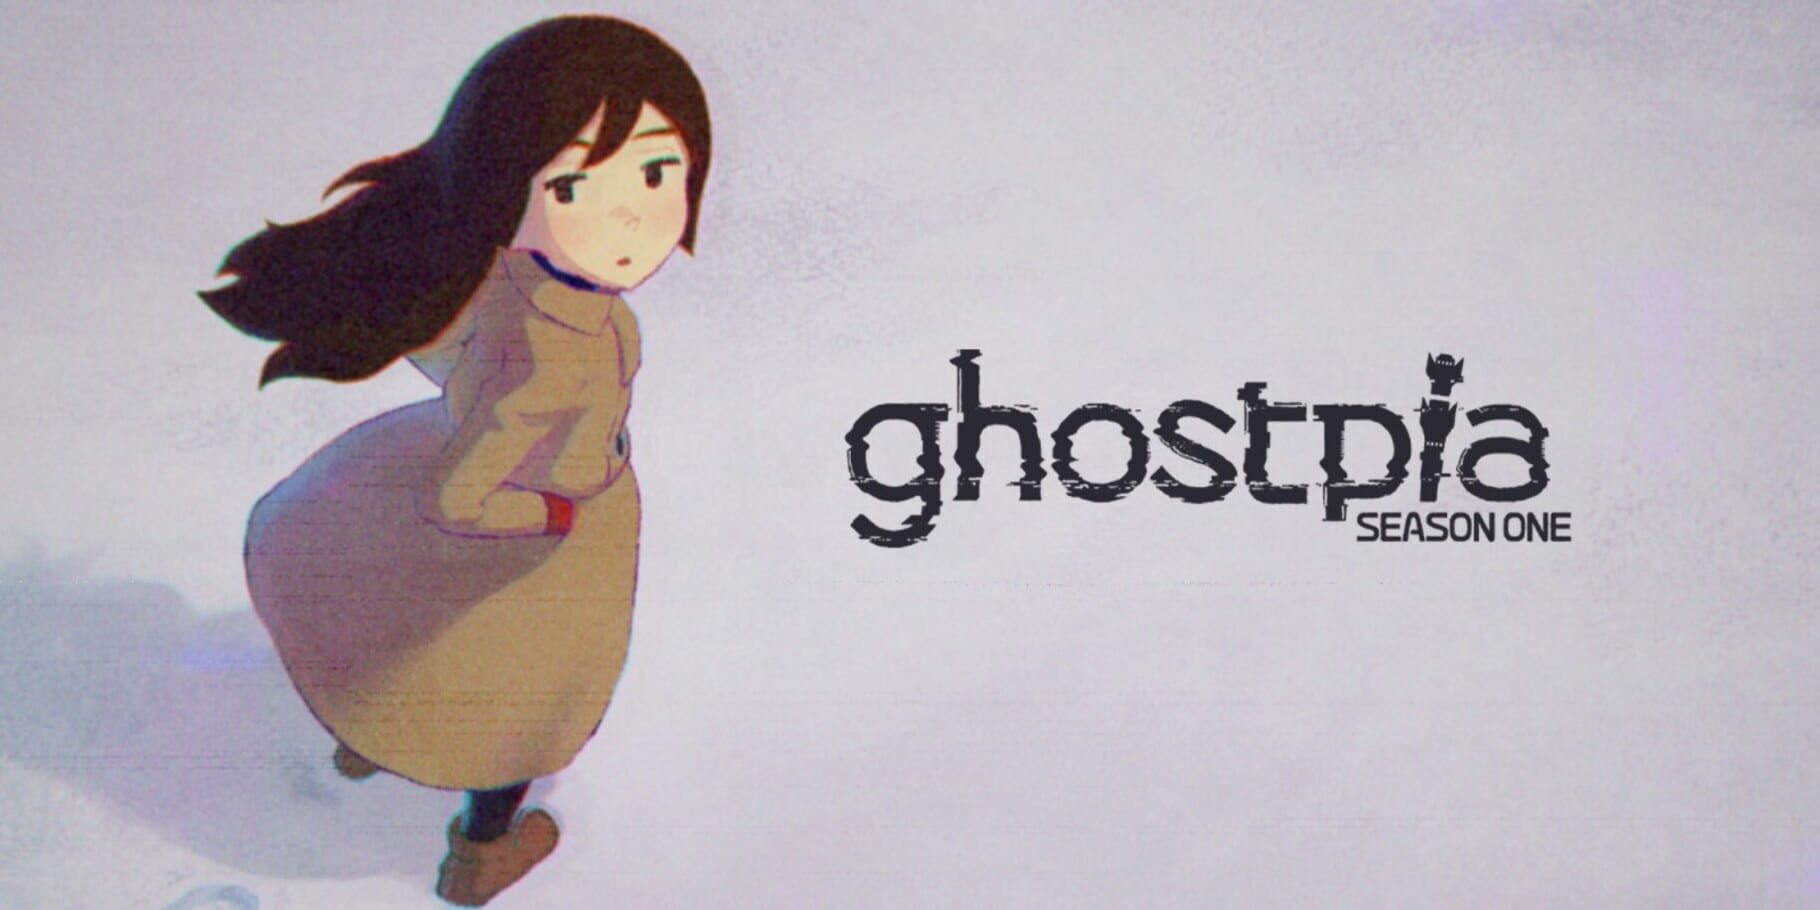 Ghostpia Season One artwork